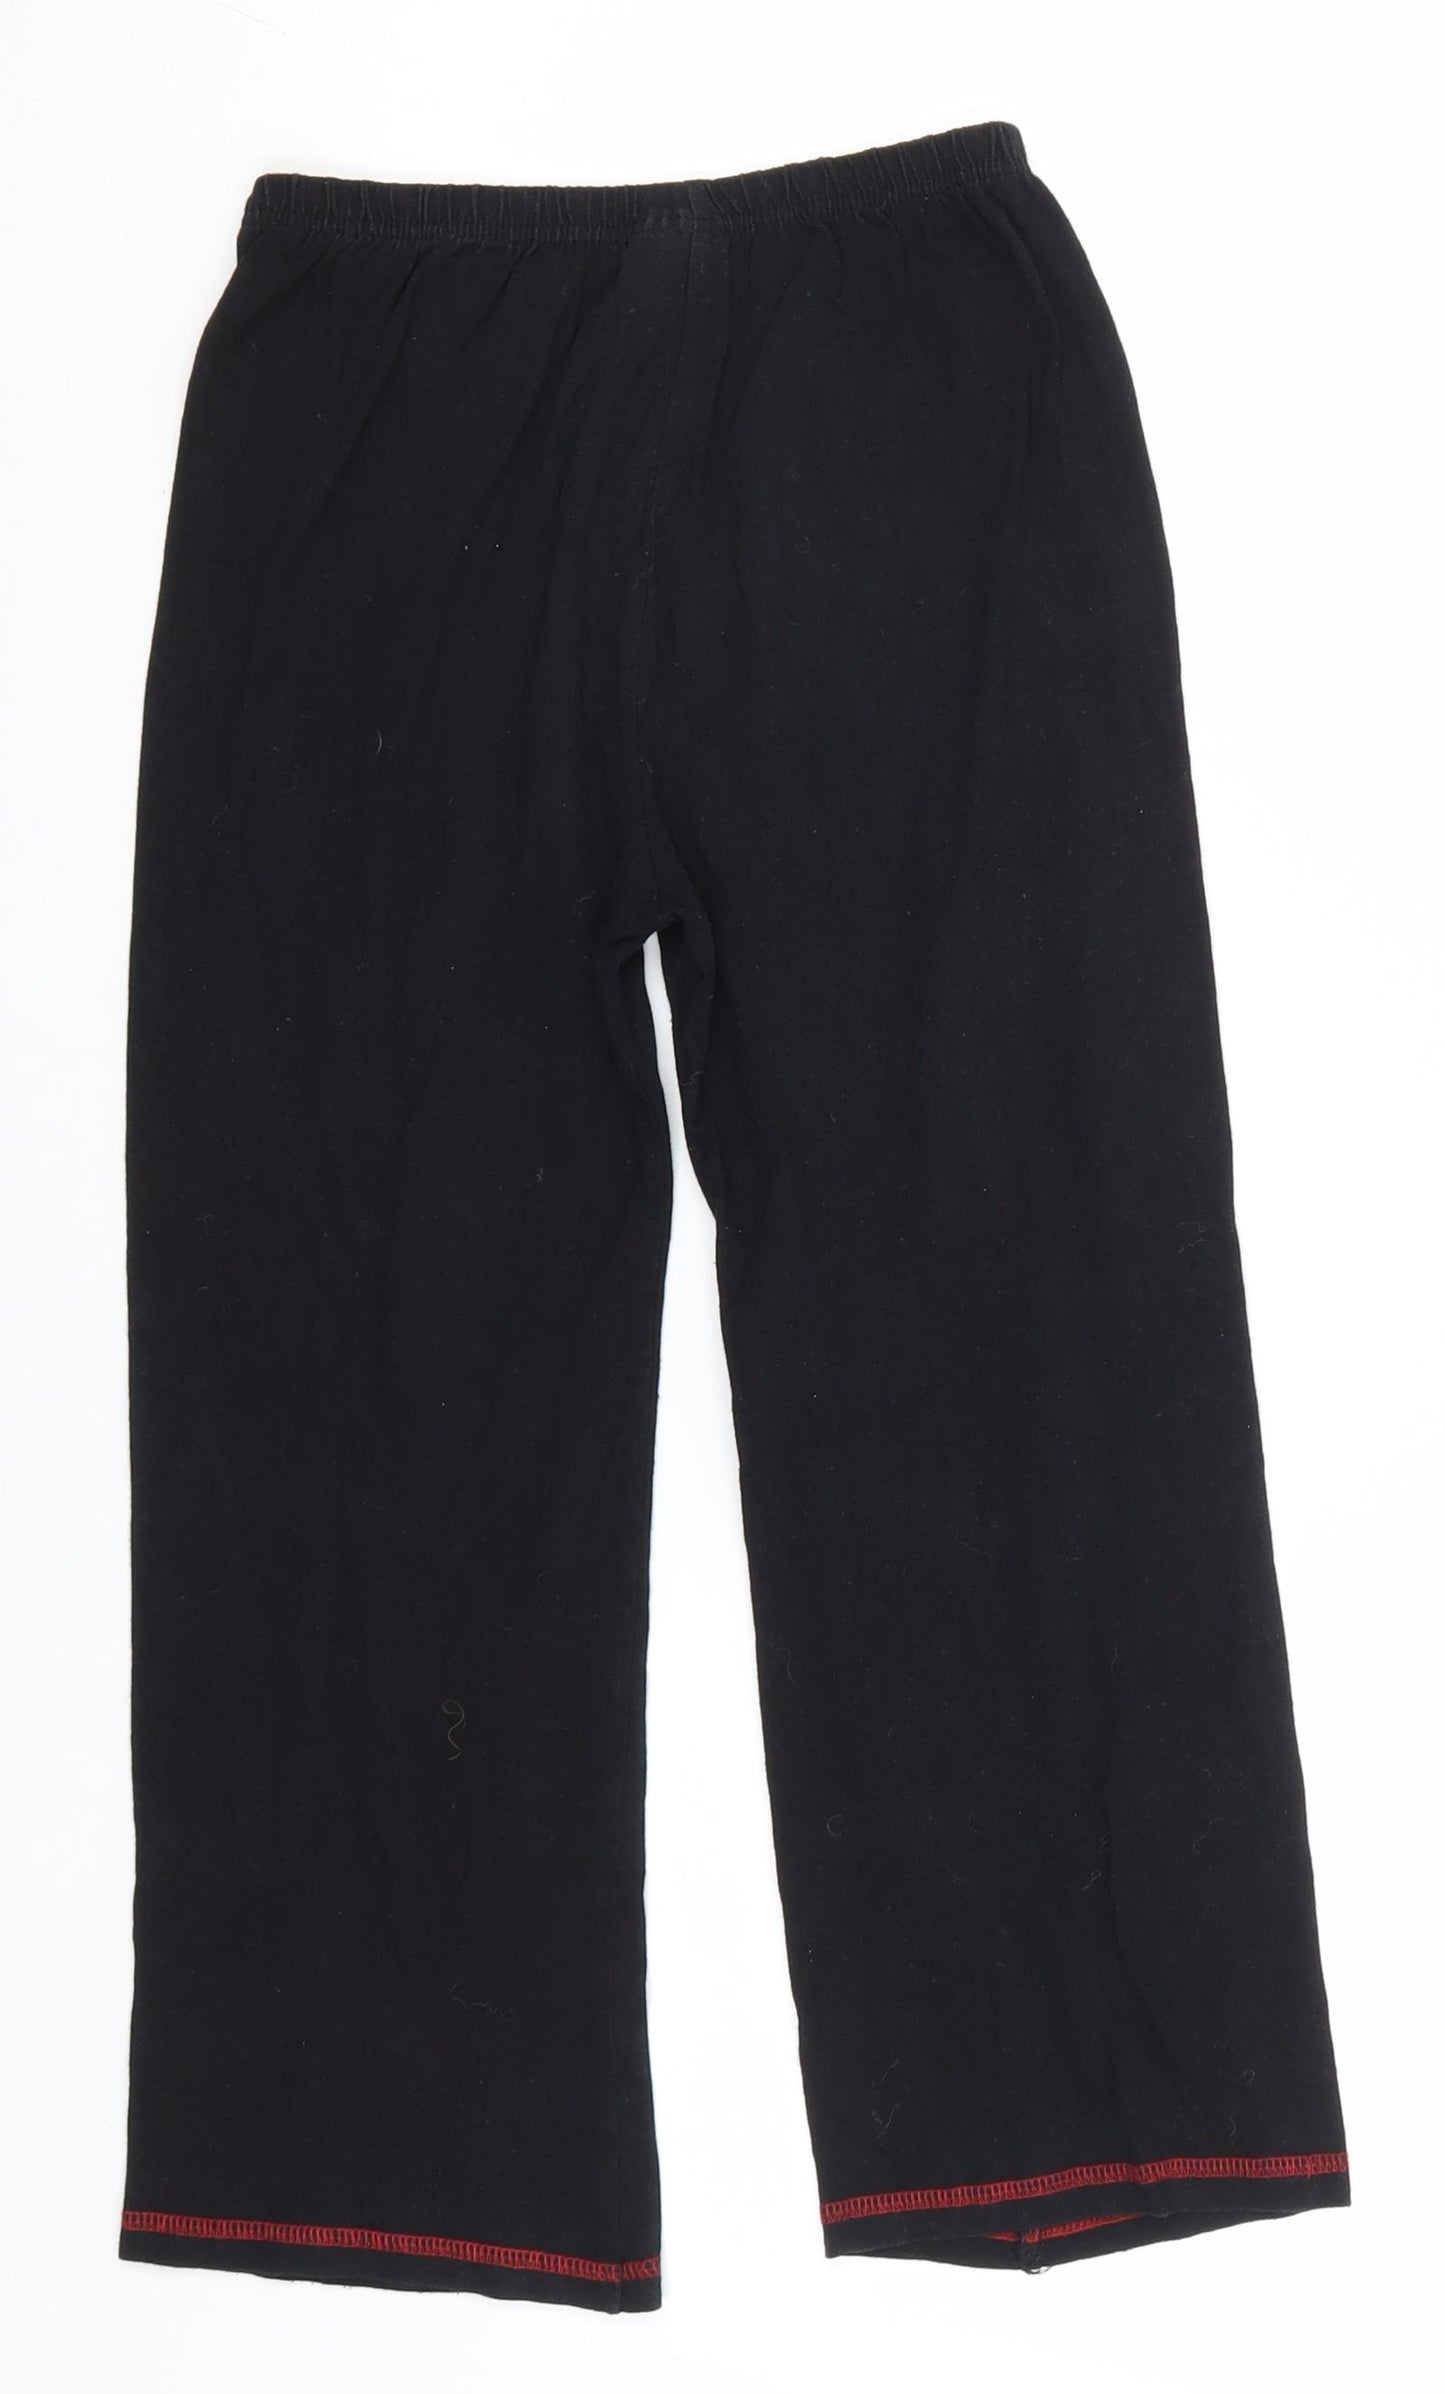 Spiderman Boys Black Solid Cotton  Pyjama Pants Size 7-8 Years